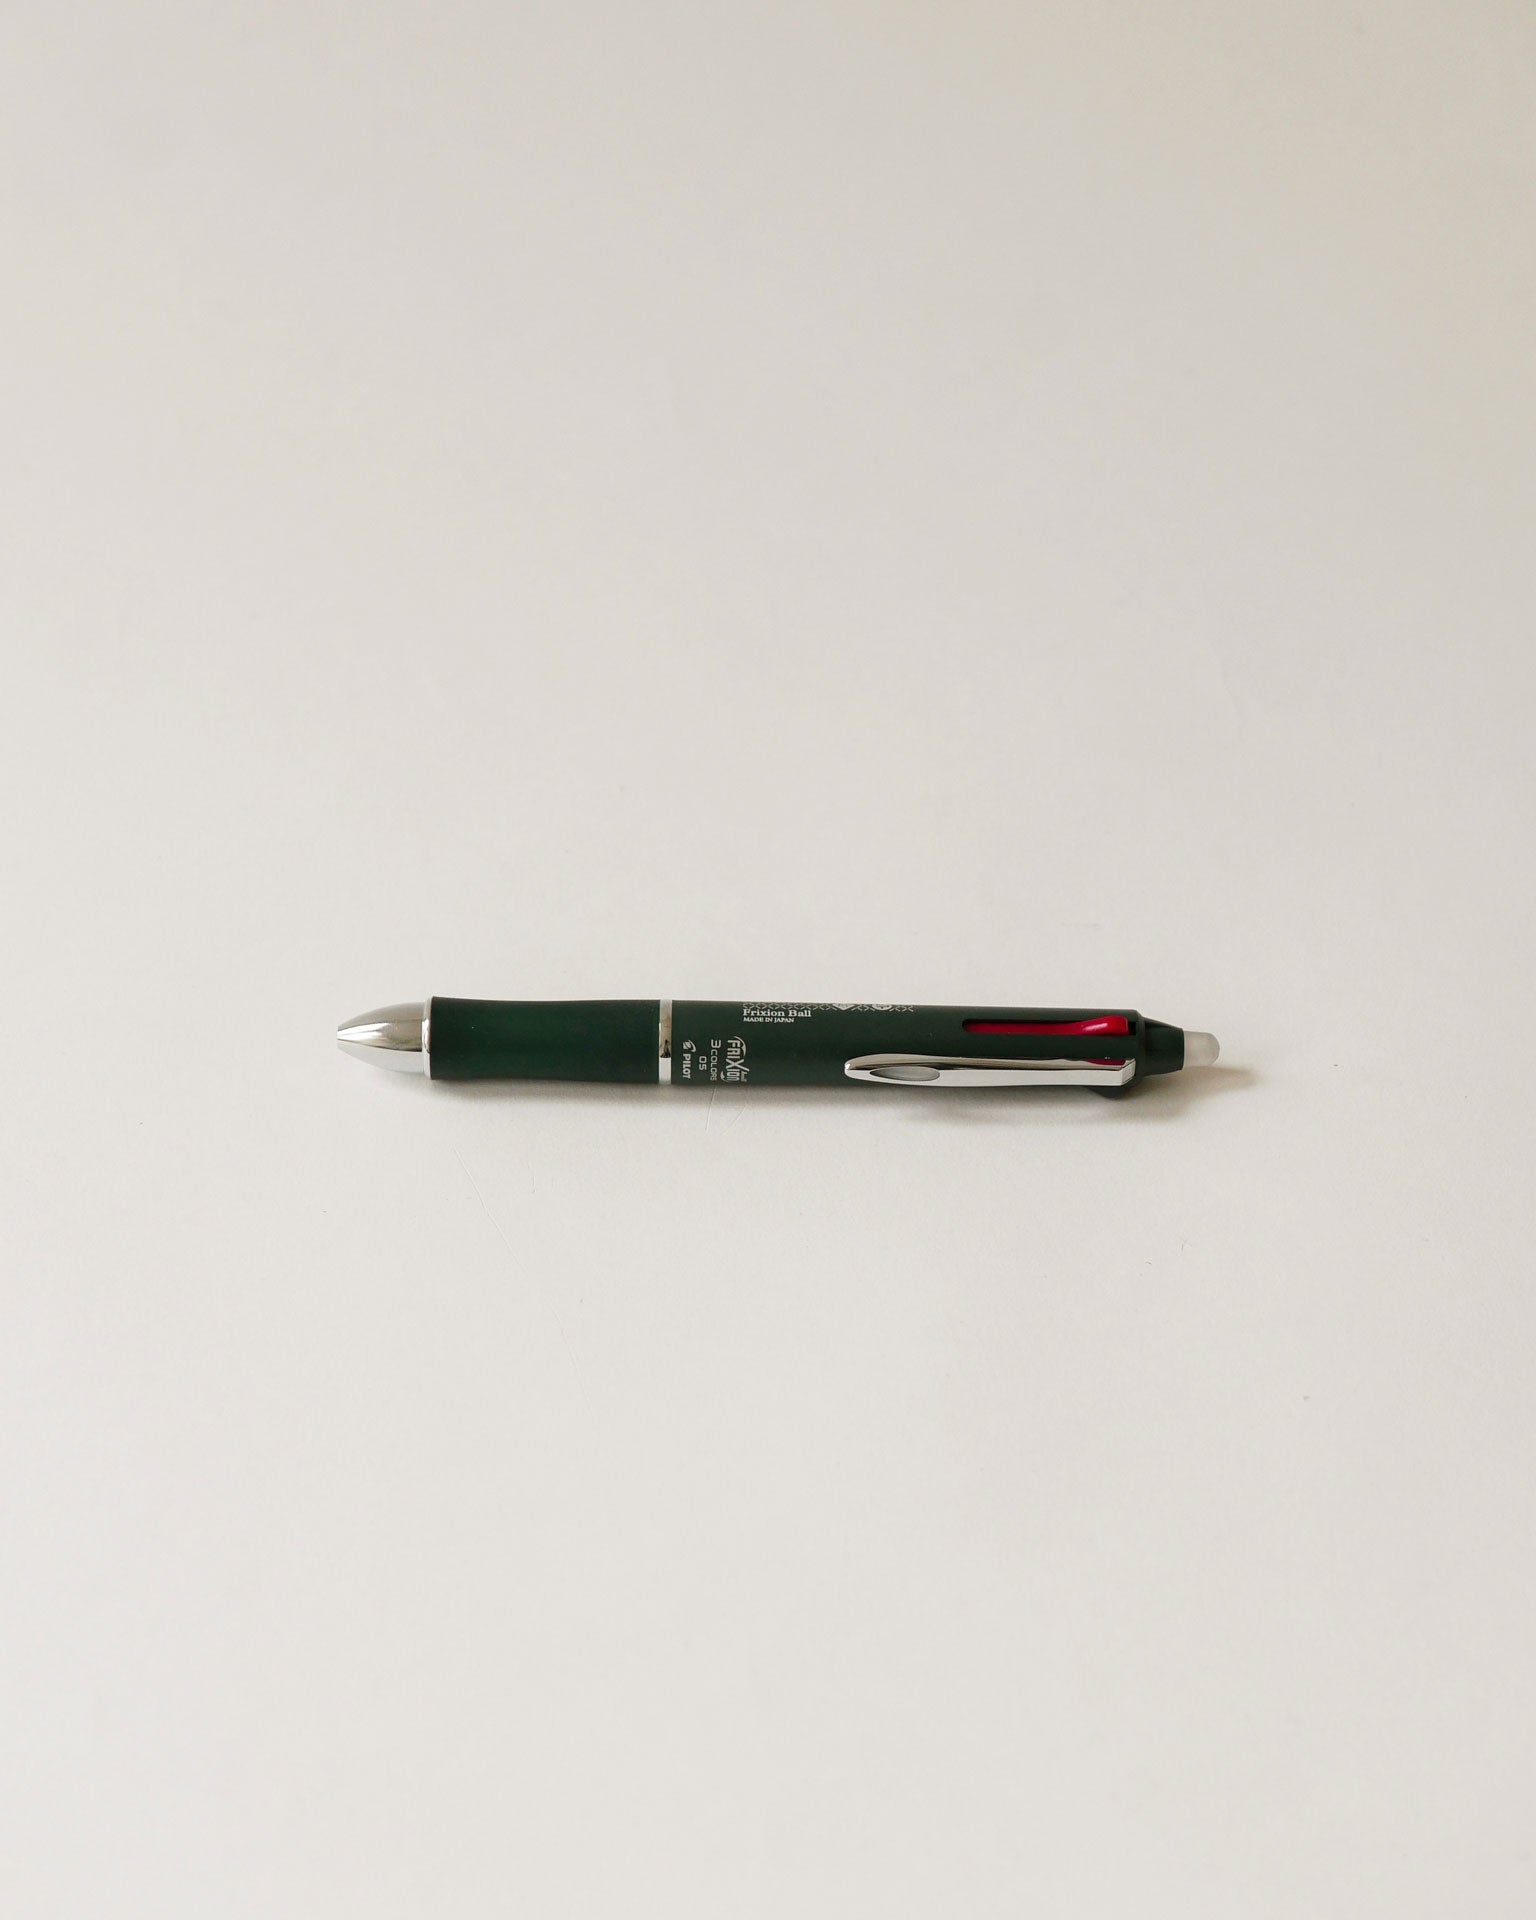 Multi Pen by Craft Design Technology